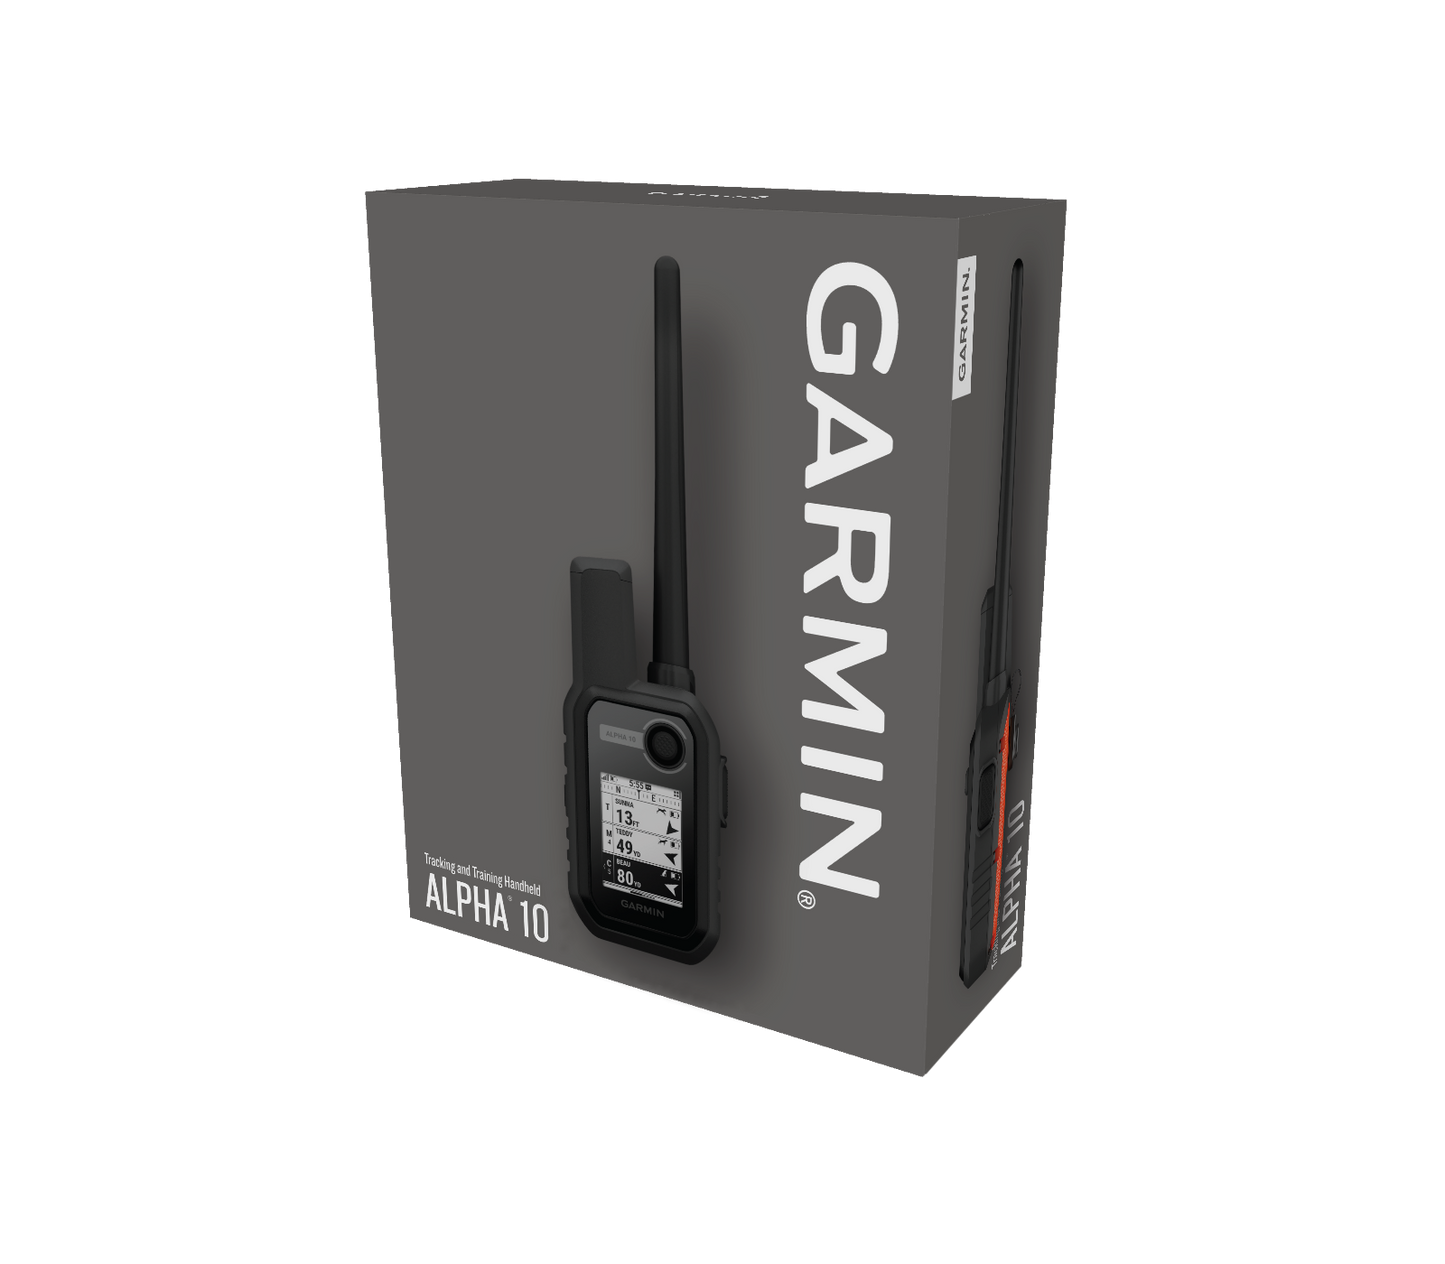 Garmin Alpha 10 Handheld